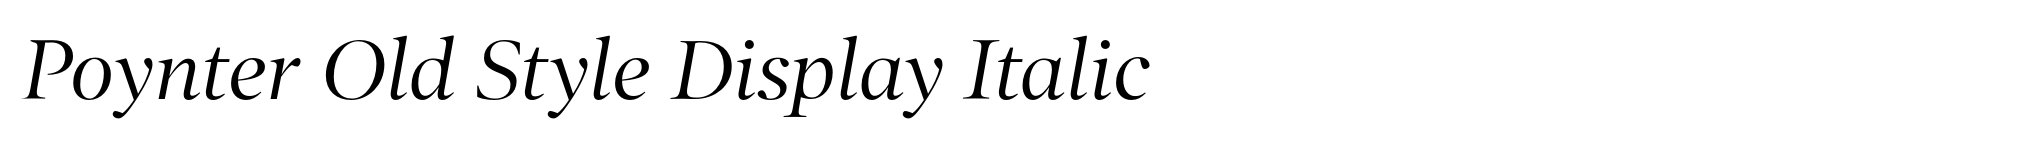 Poynter Old Style Display Italic image